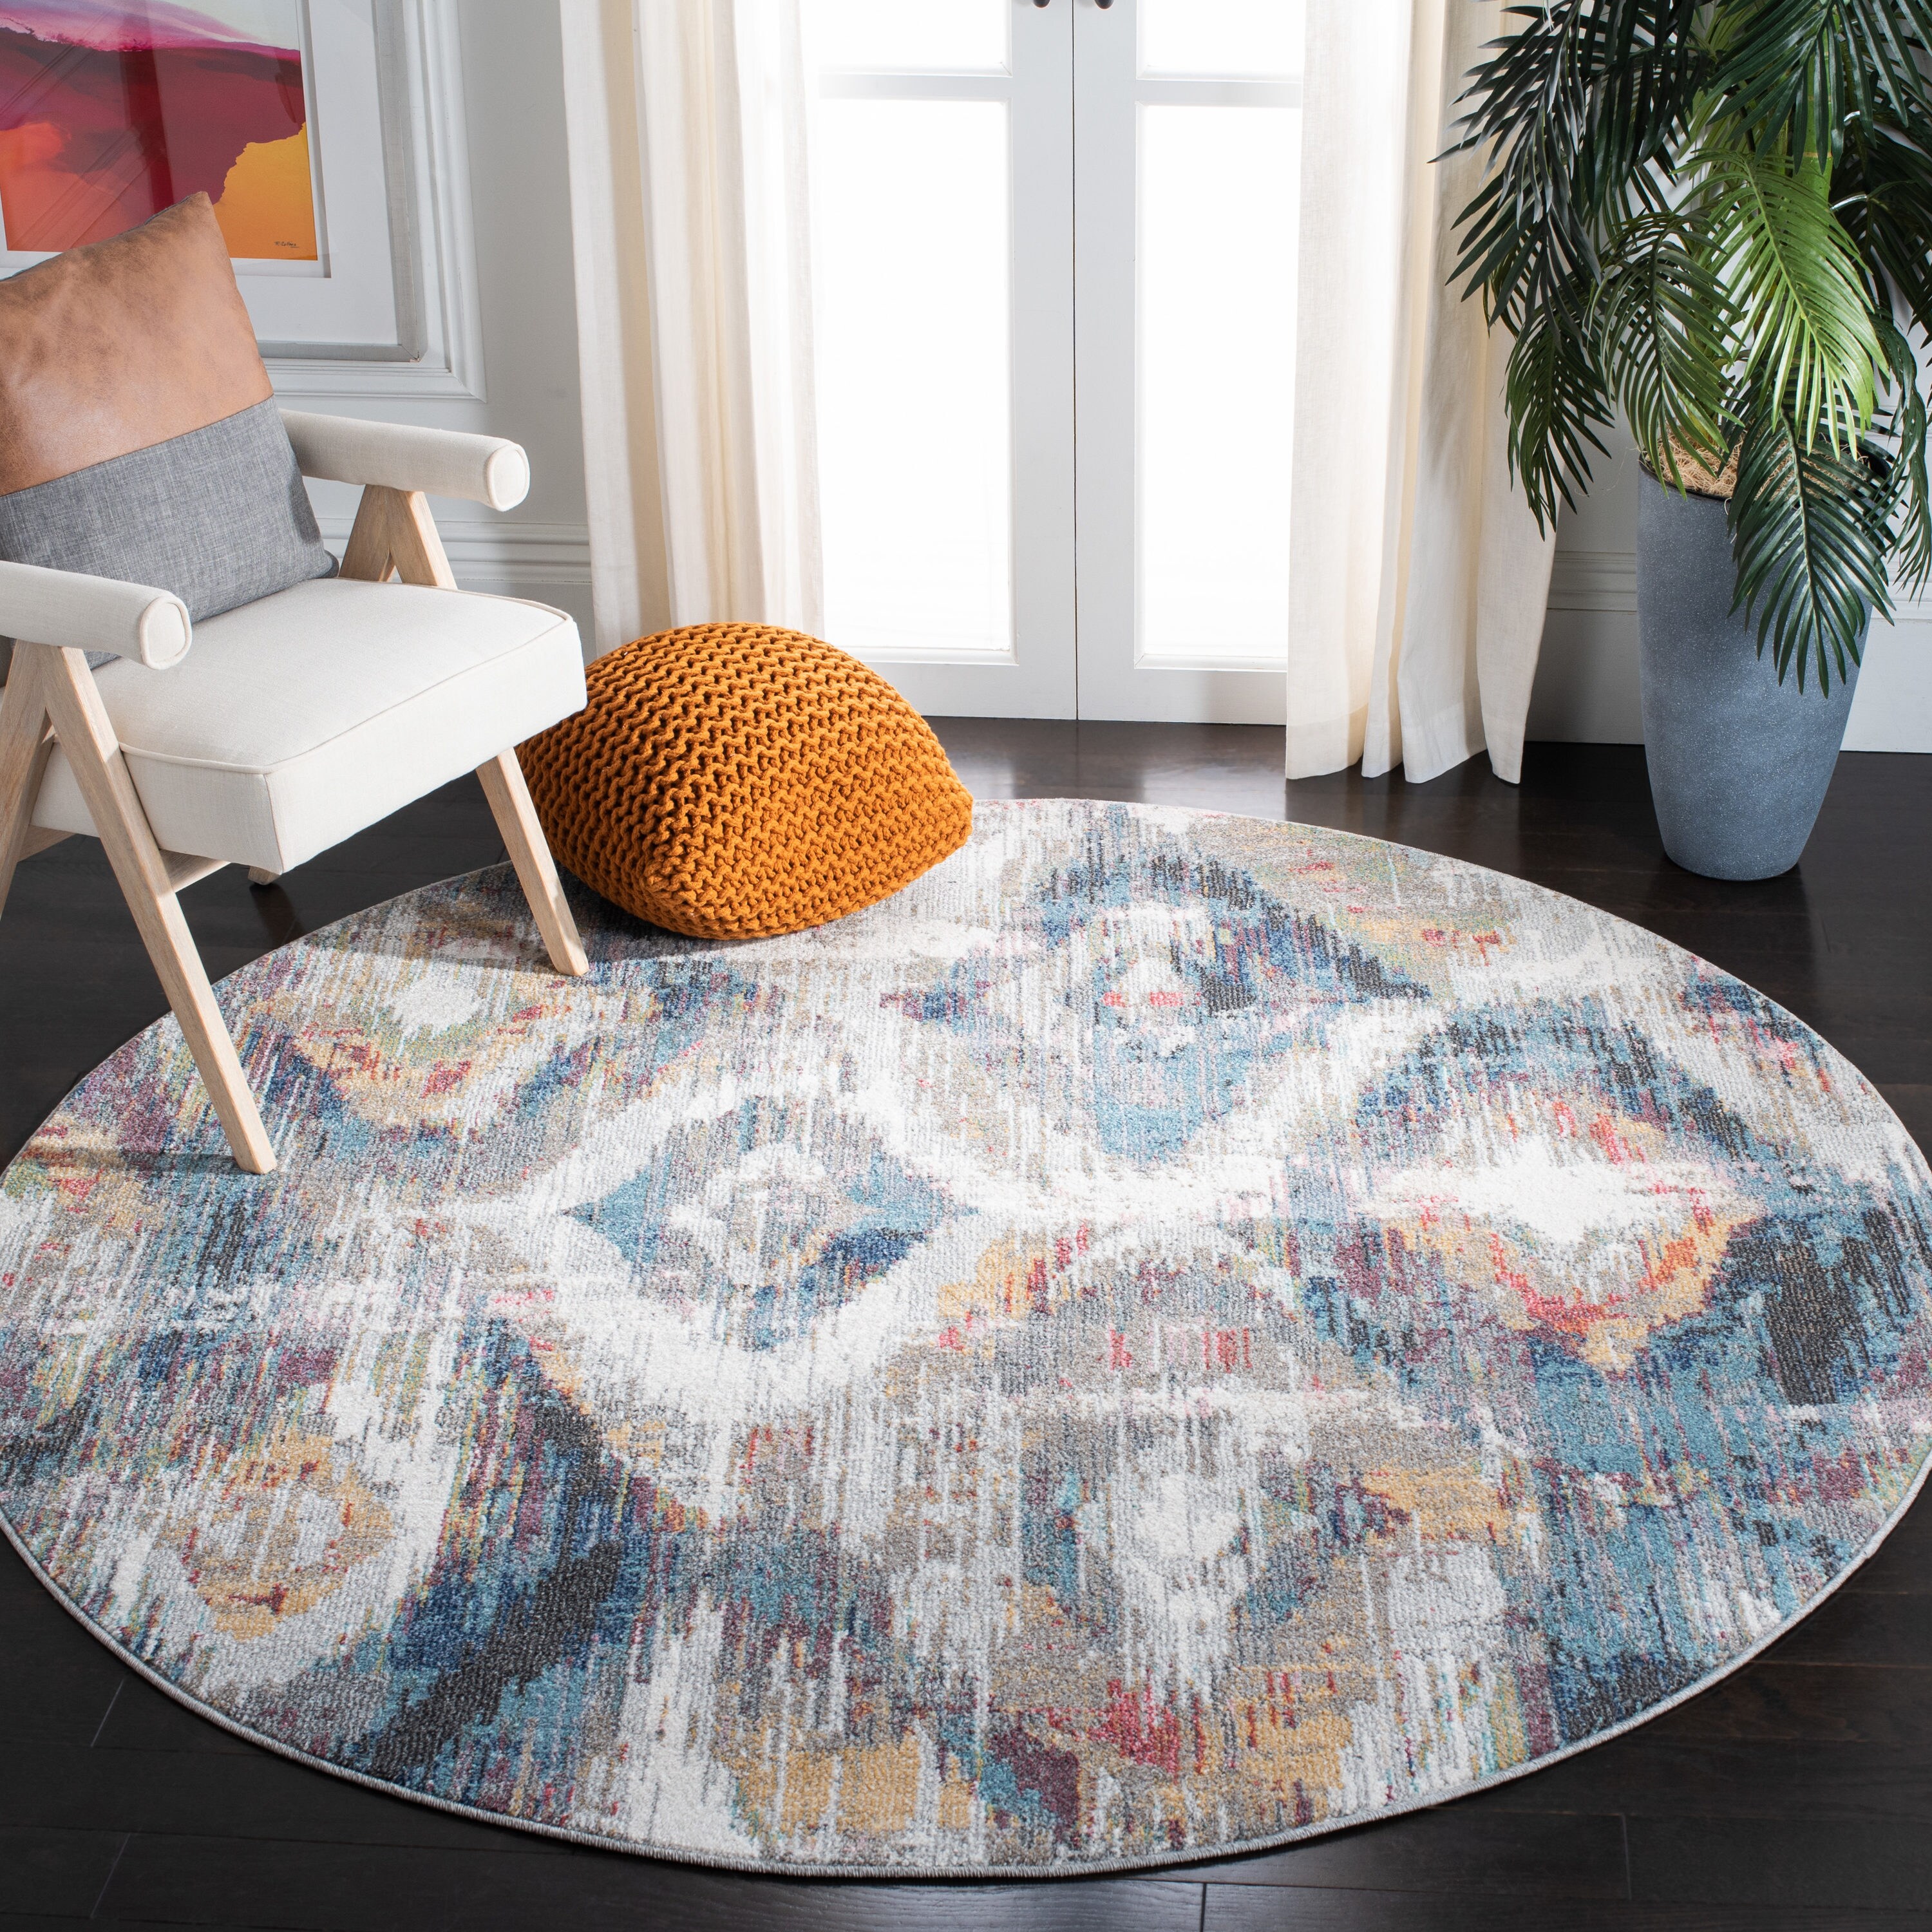 Flaming Phenix Pattern Area Rugs Soft Bedroom Carpet Living Room Round Floor Mat 